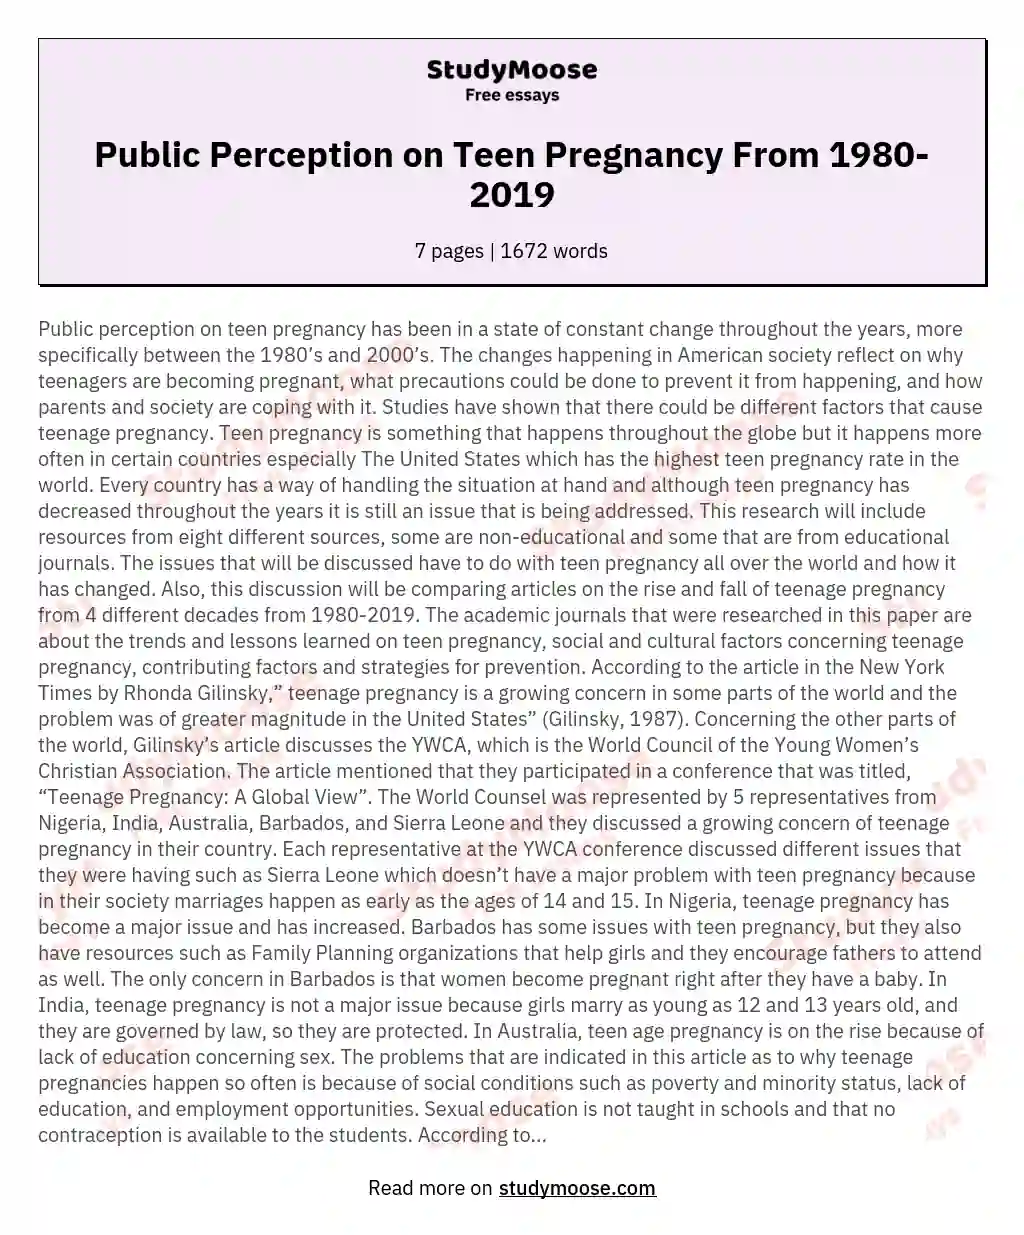 Public Perception on Teen Pregnancy From 1980-2019 essay